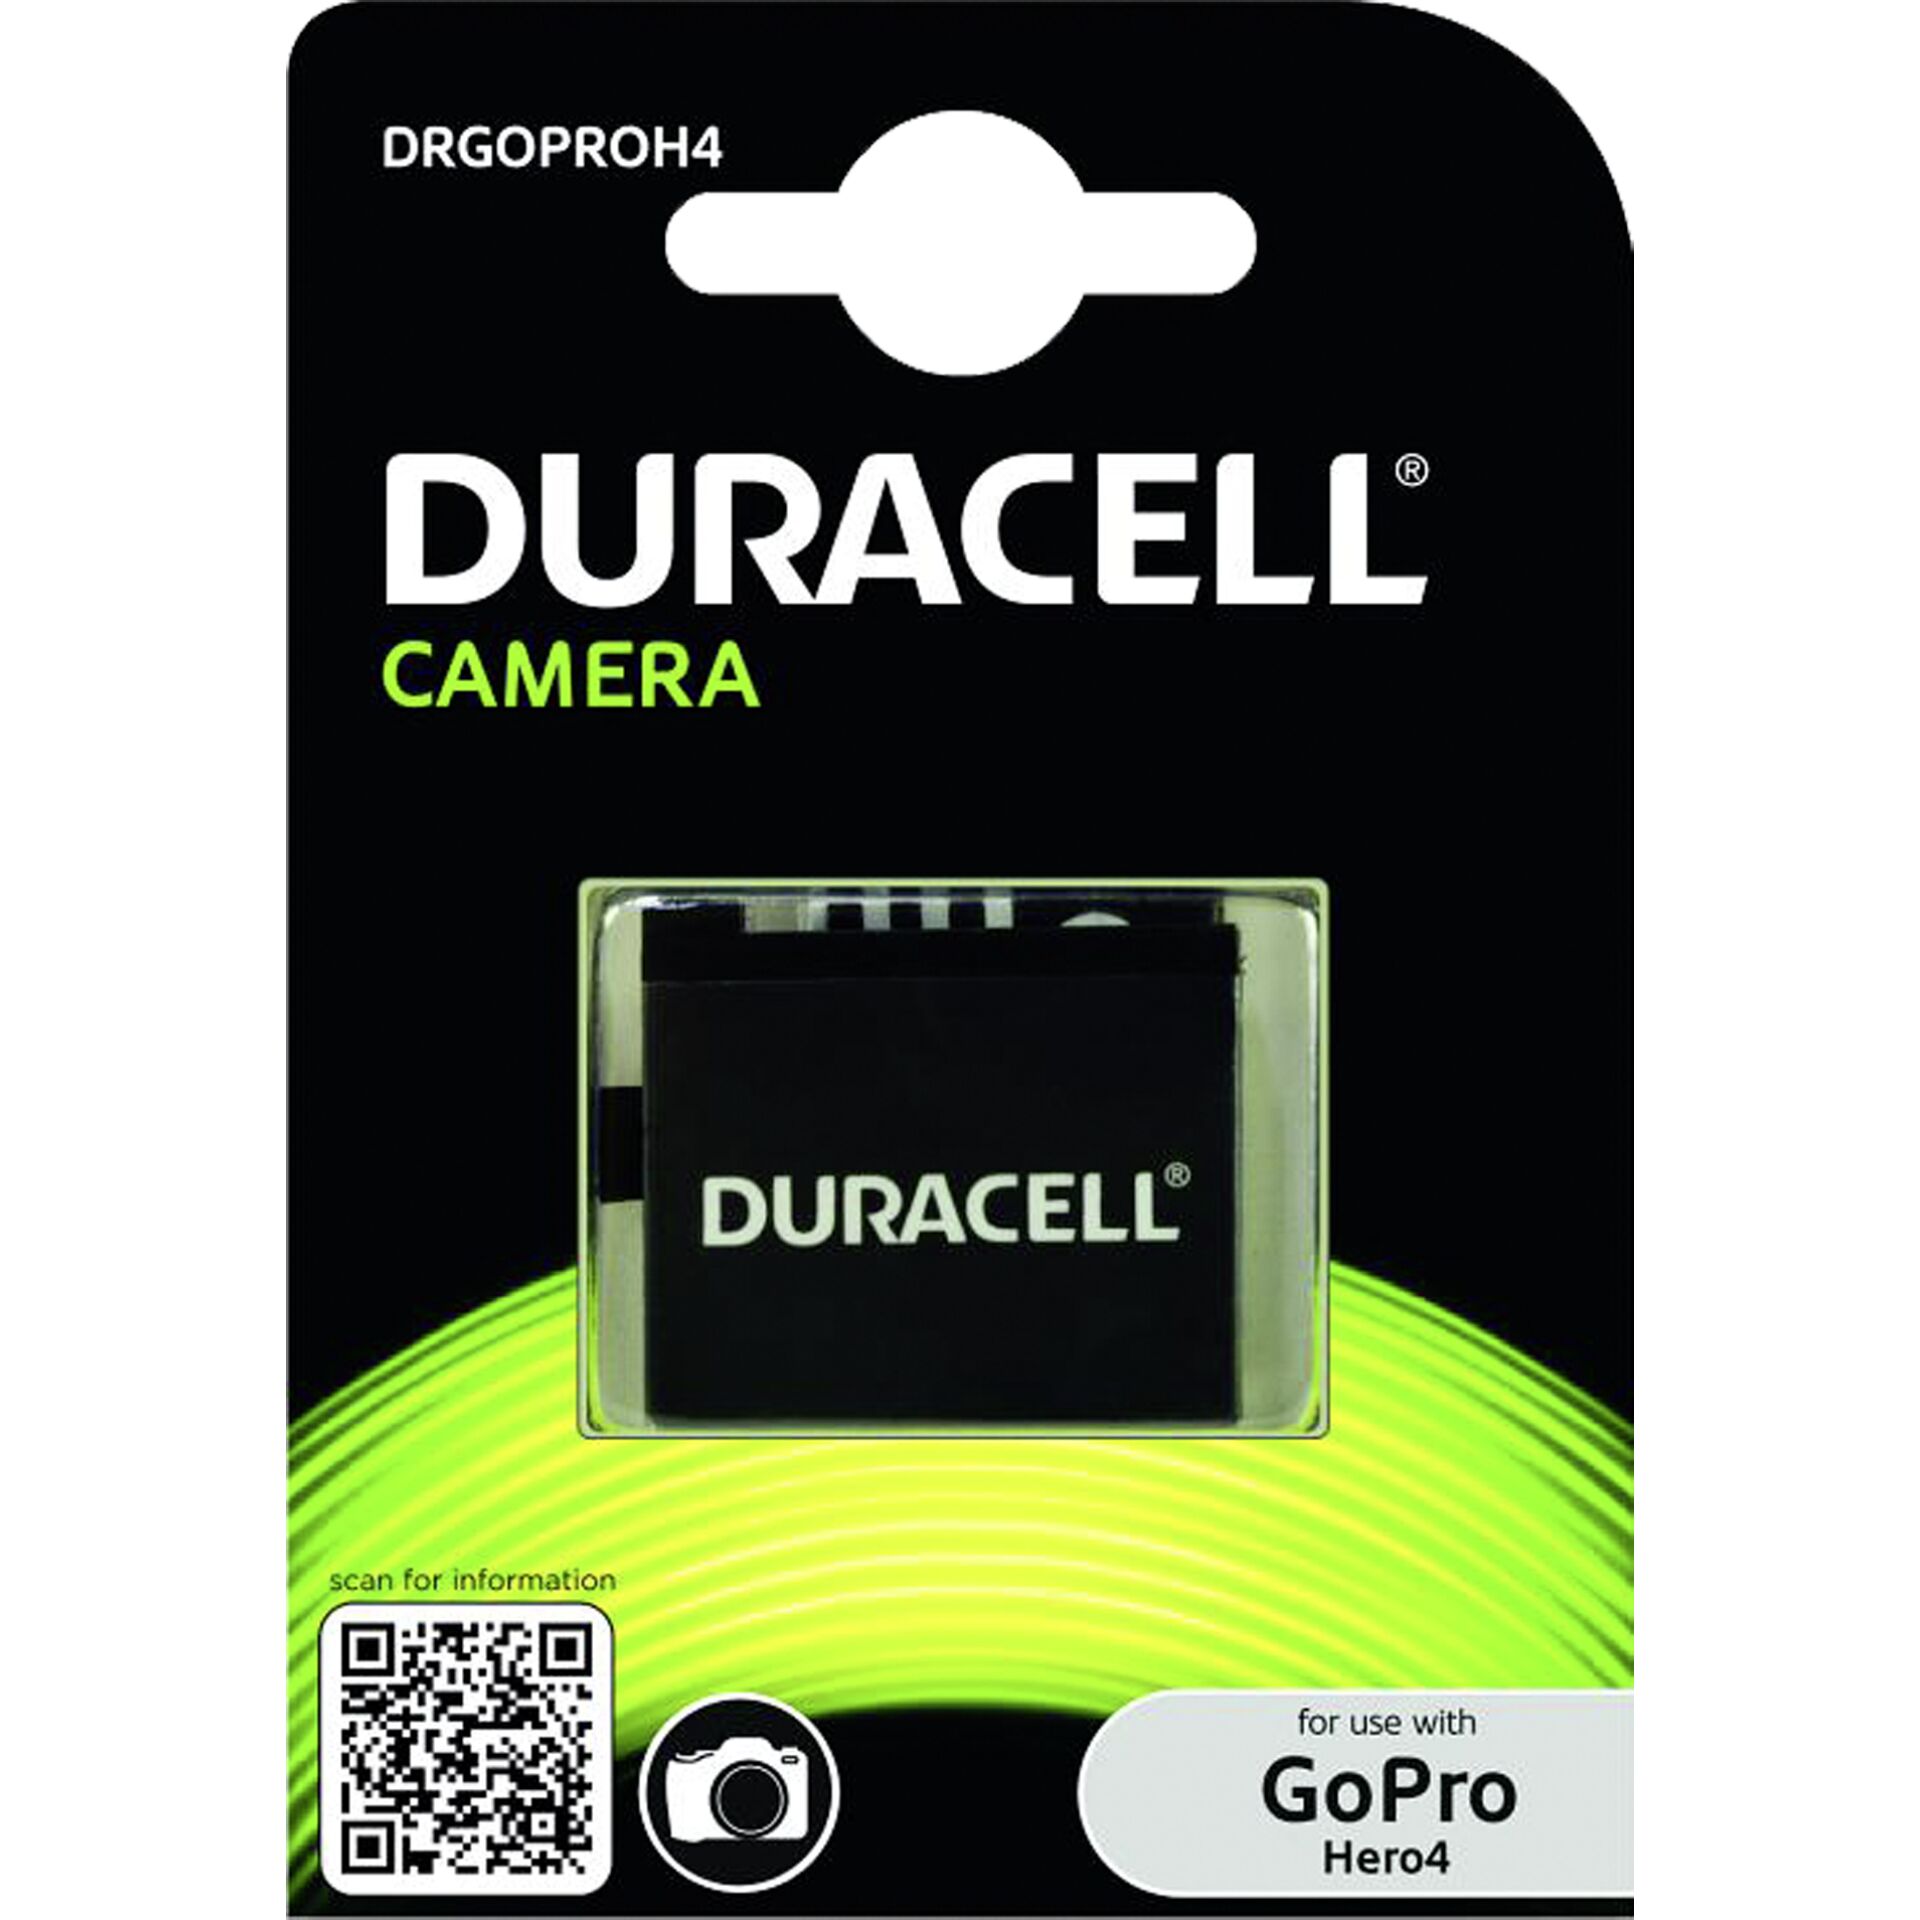 Duracell DRGOPROH4 Kamera-/Camcorder-Akku Lithium-Ion (Li-Ion) 1160 mAh